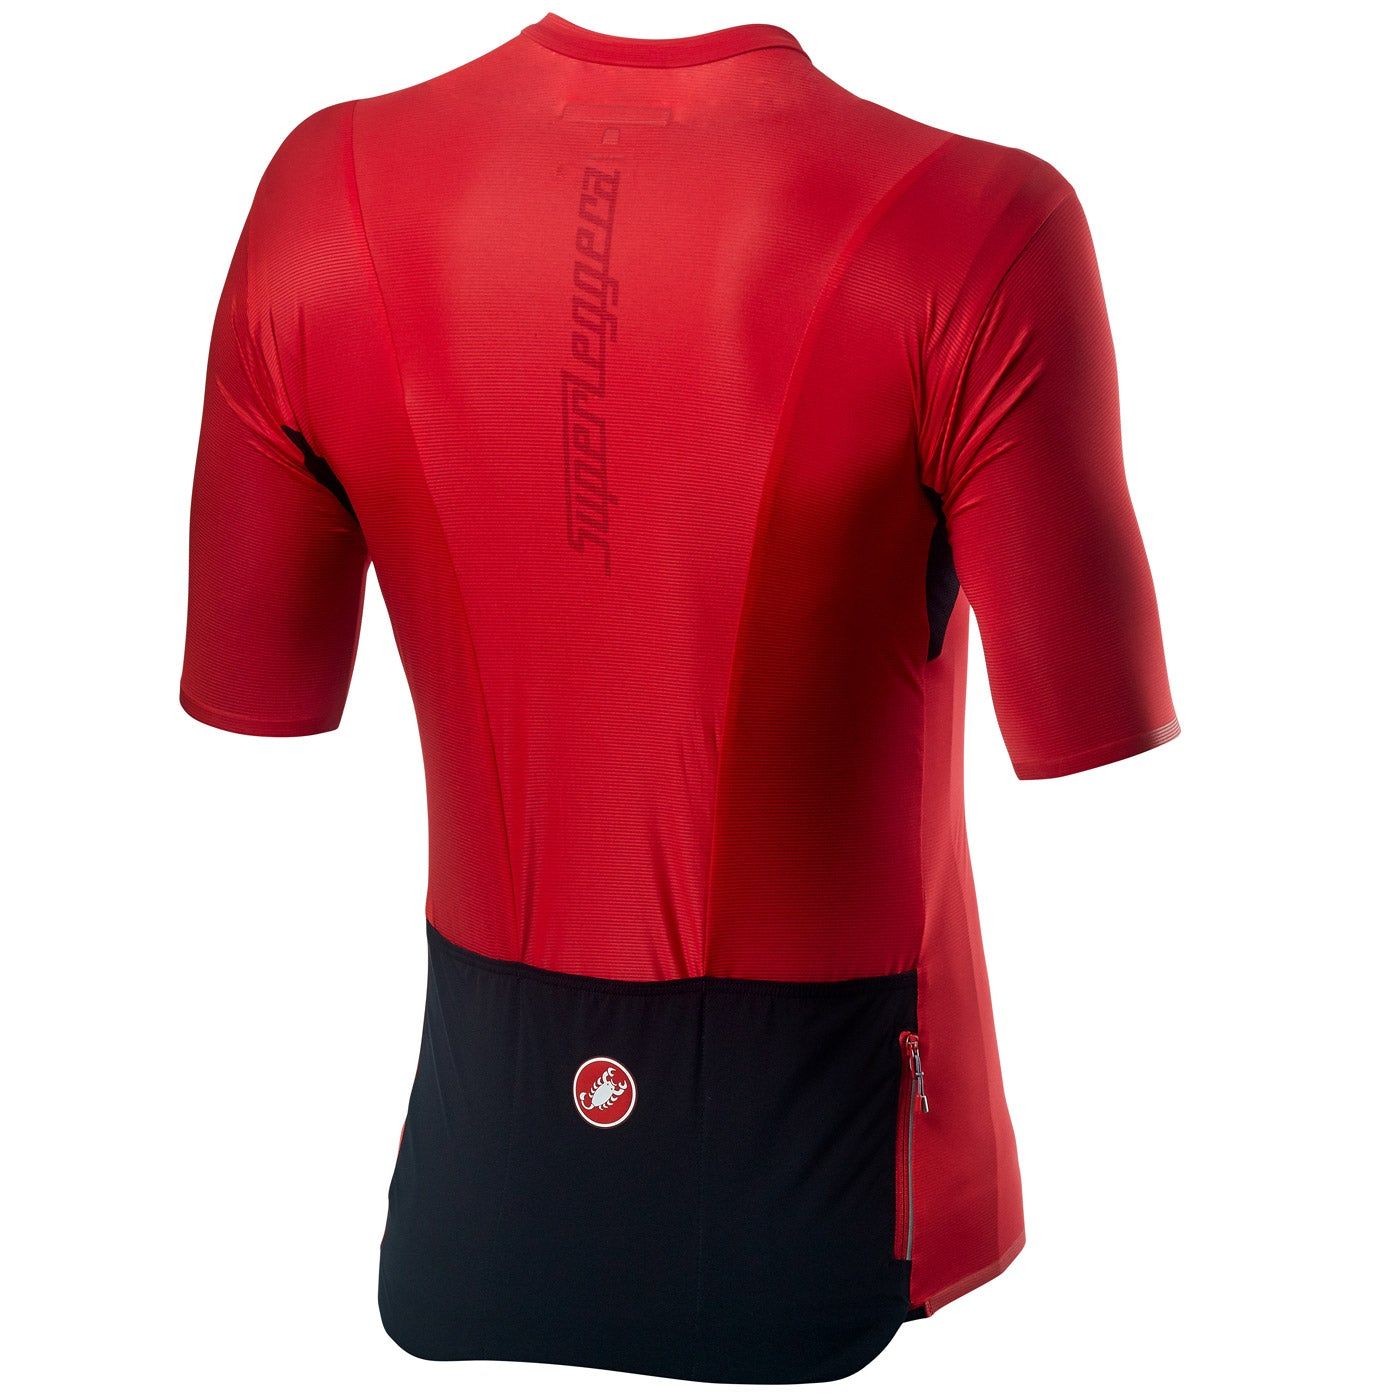 Castelli maglie superleggera 2 jersey - rosso